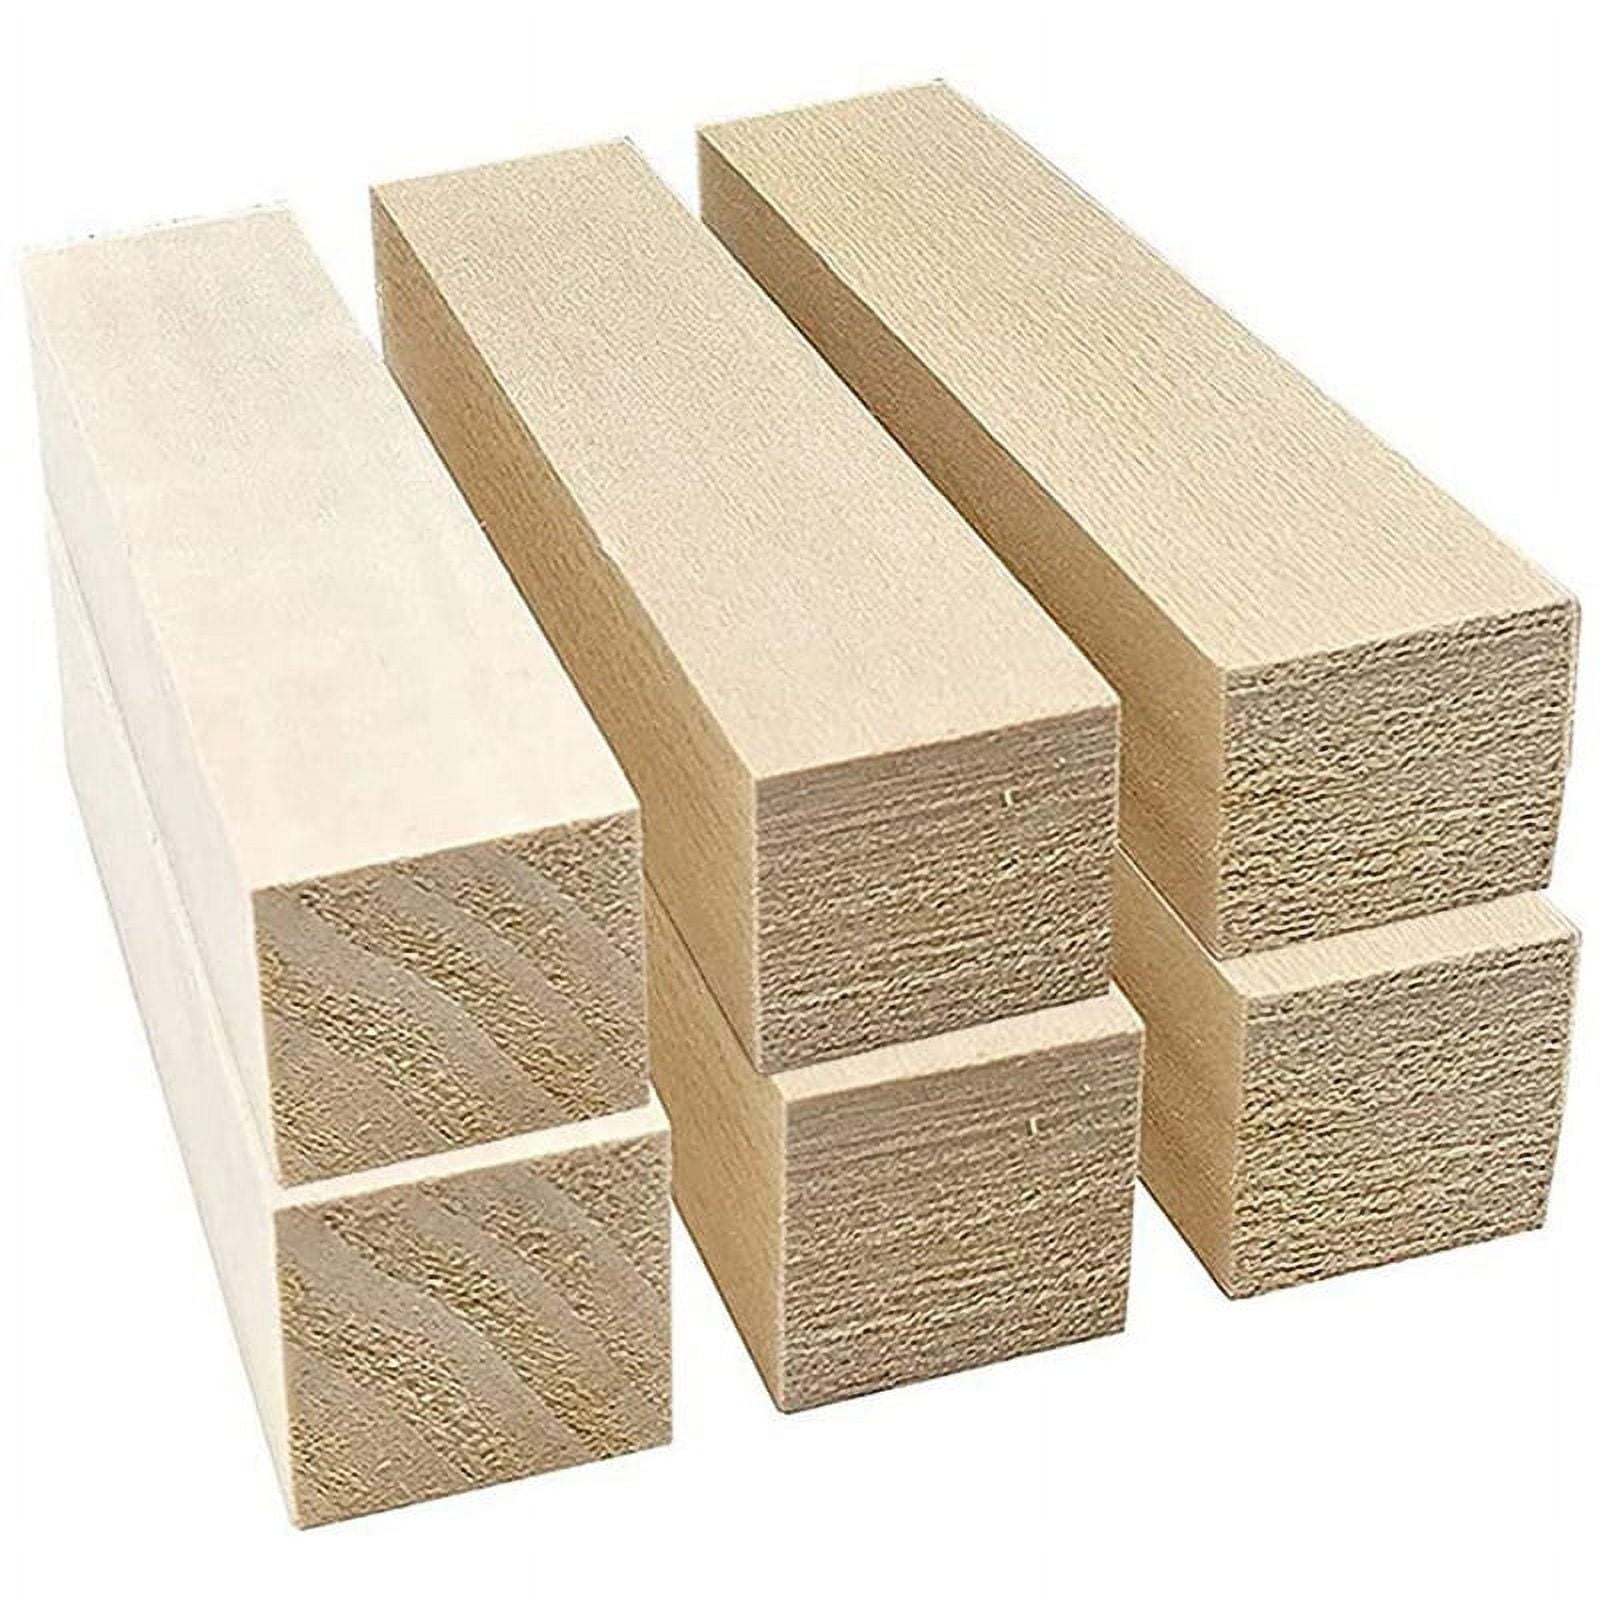 6Pcs Basswood Carving Blocks for Wood Beginners Carving Kit DIY